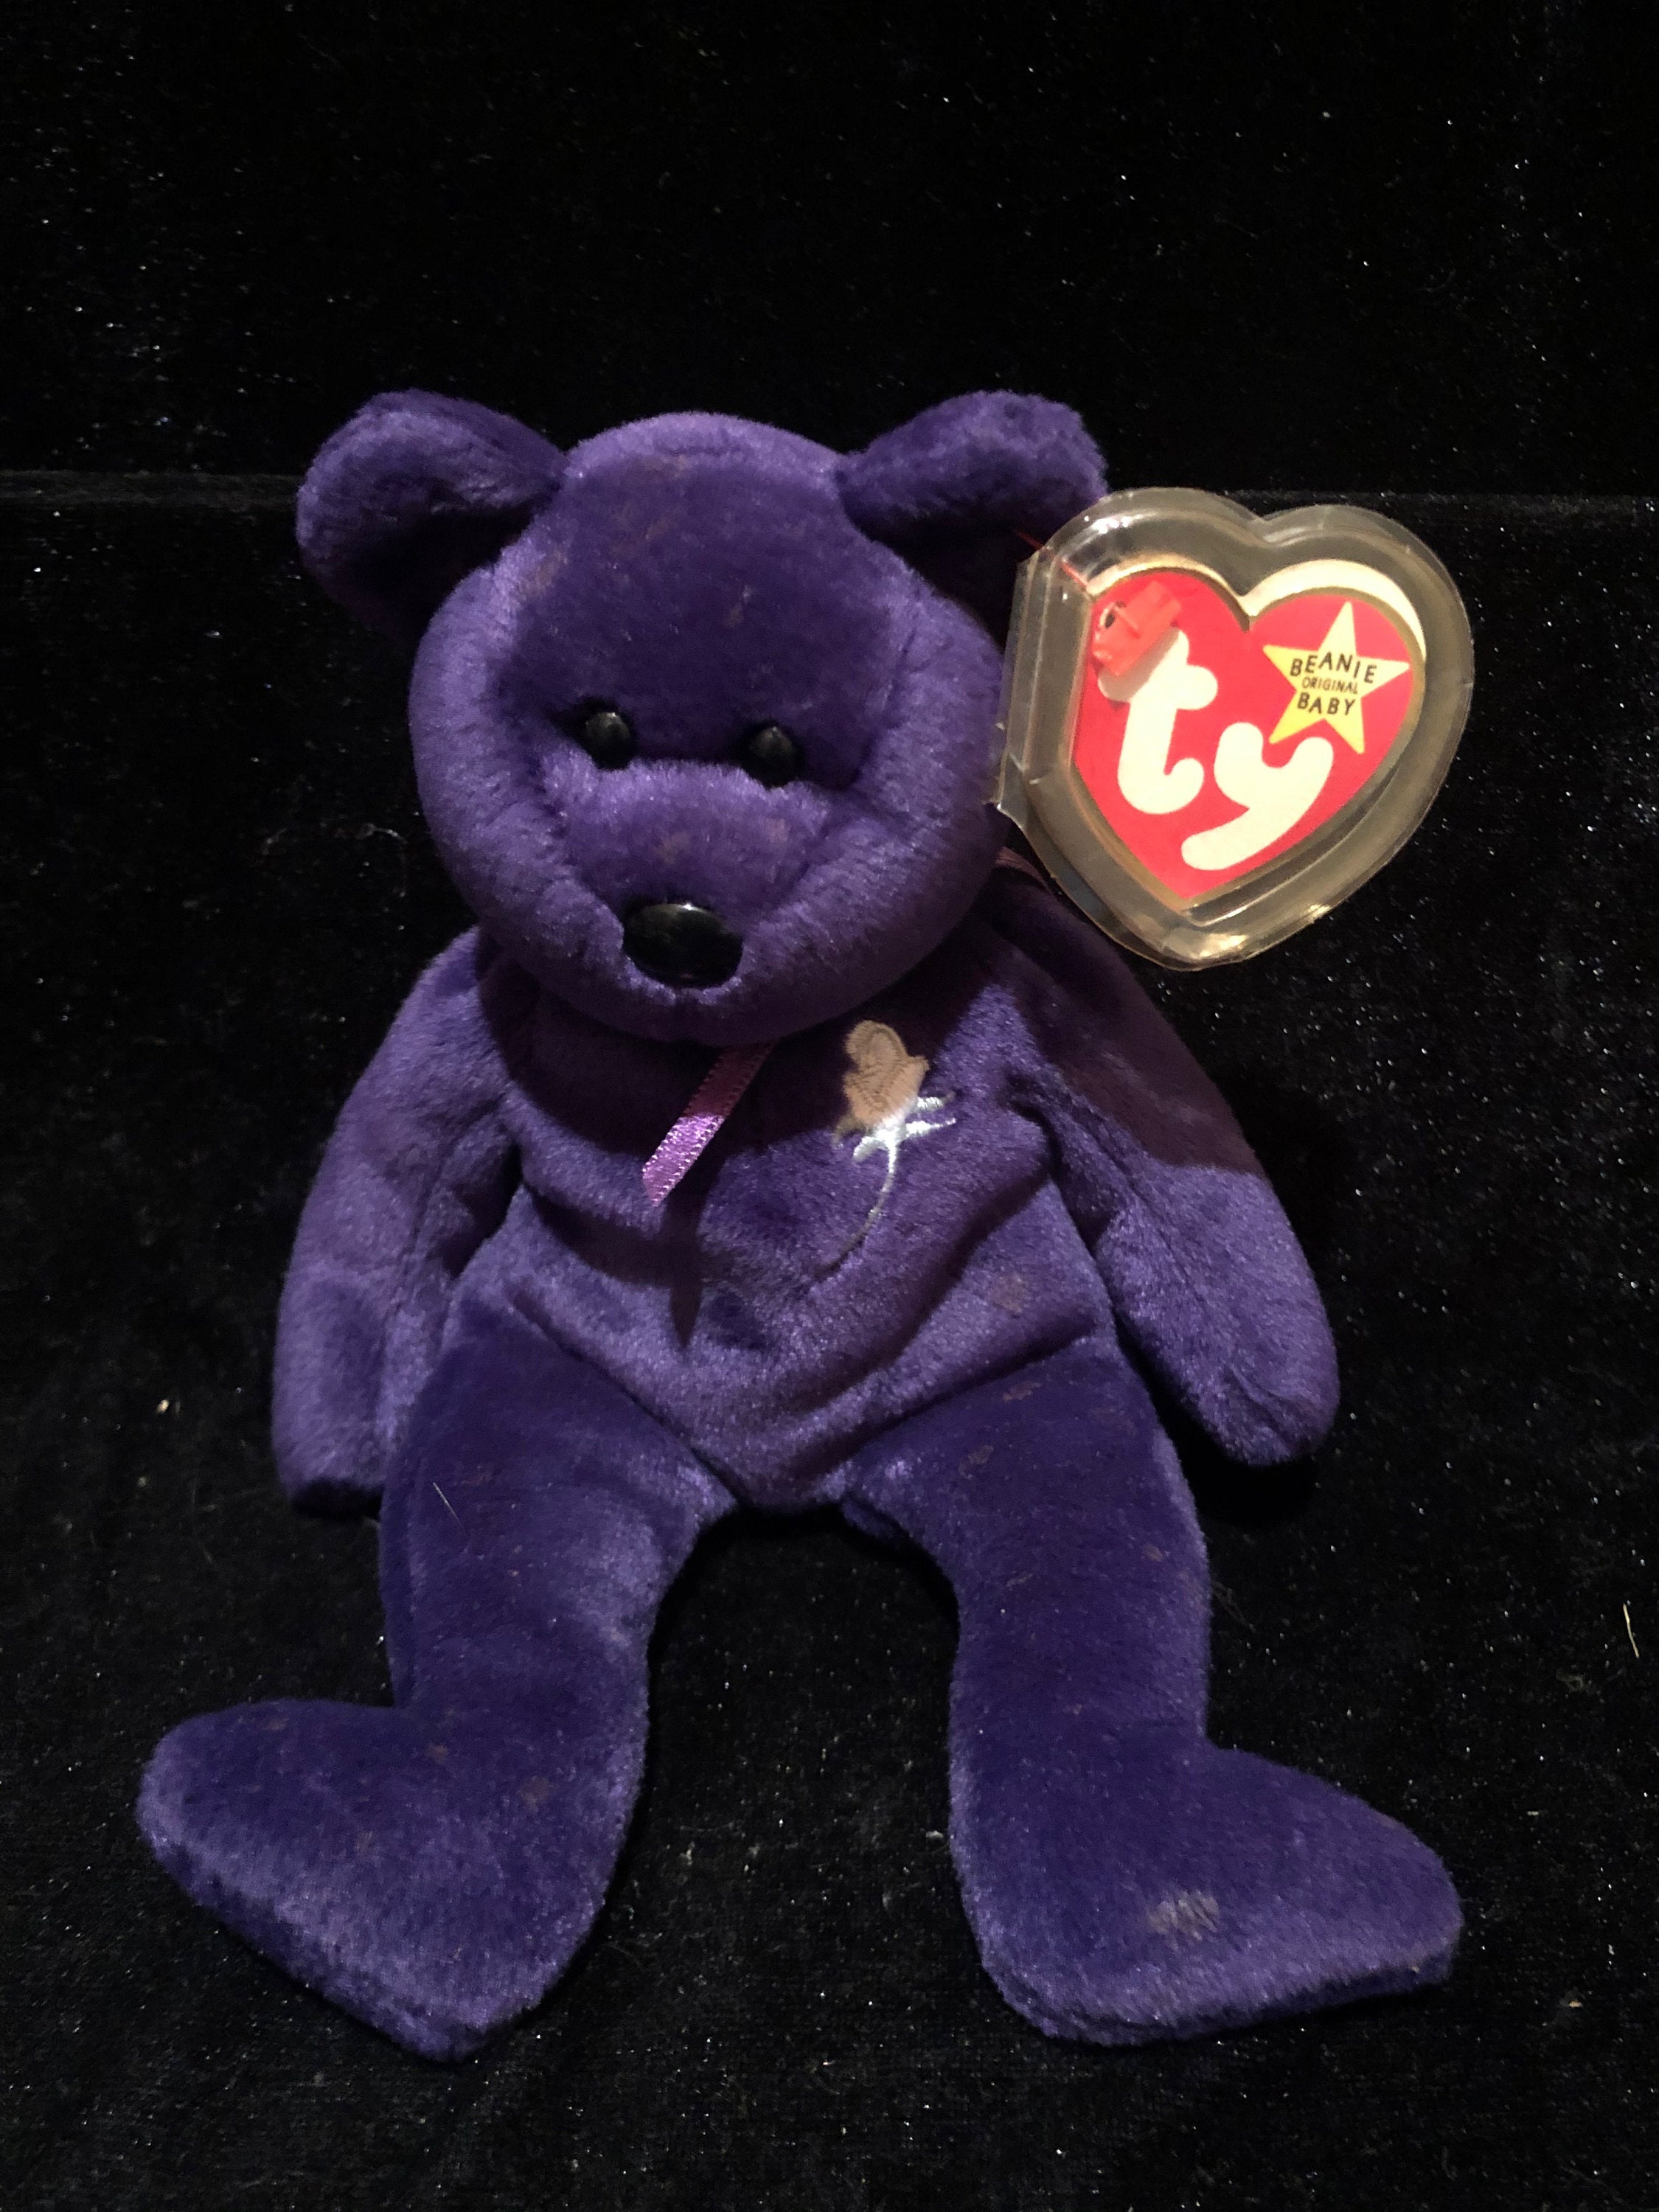 1997 TY Beanie Babies  Princess Diana memorial bear no TY ear tag Preowned 